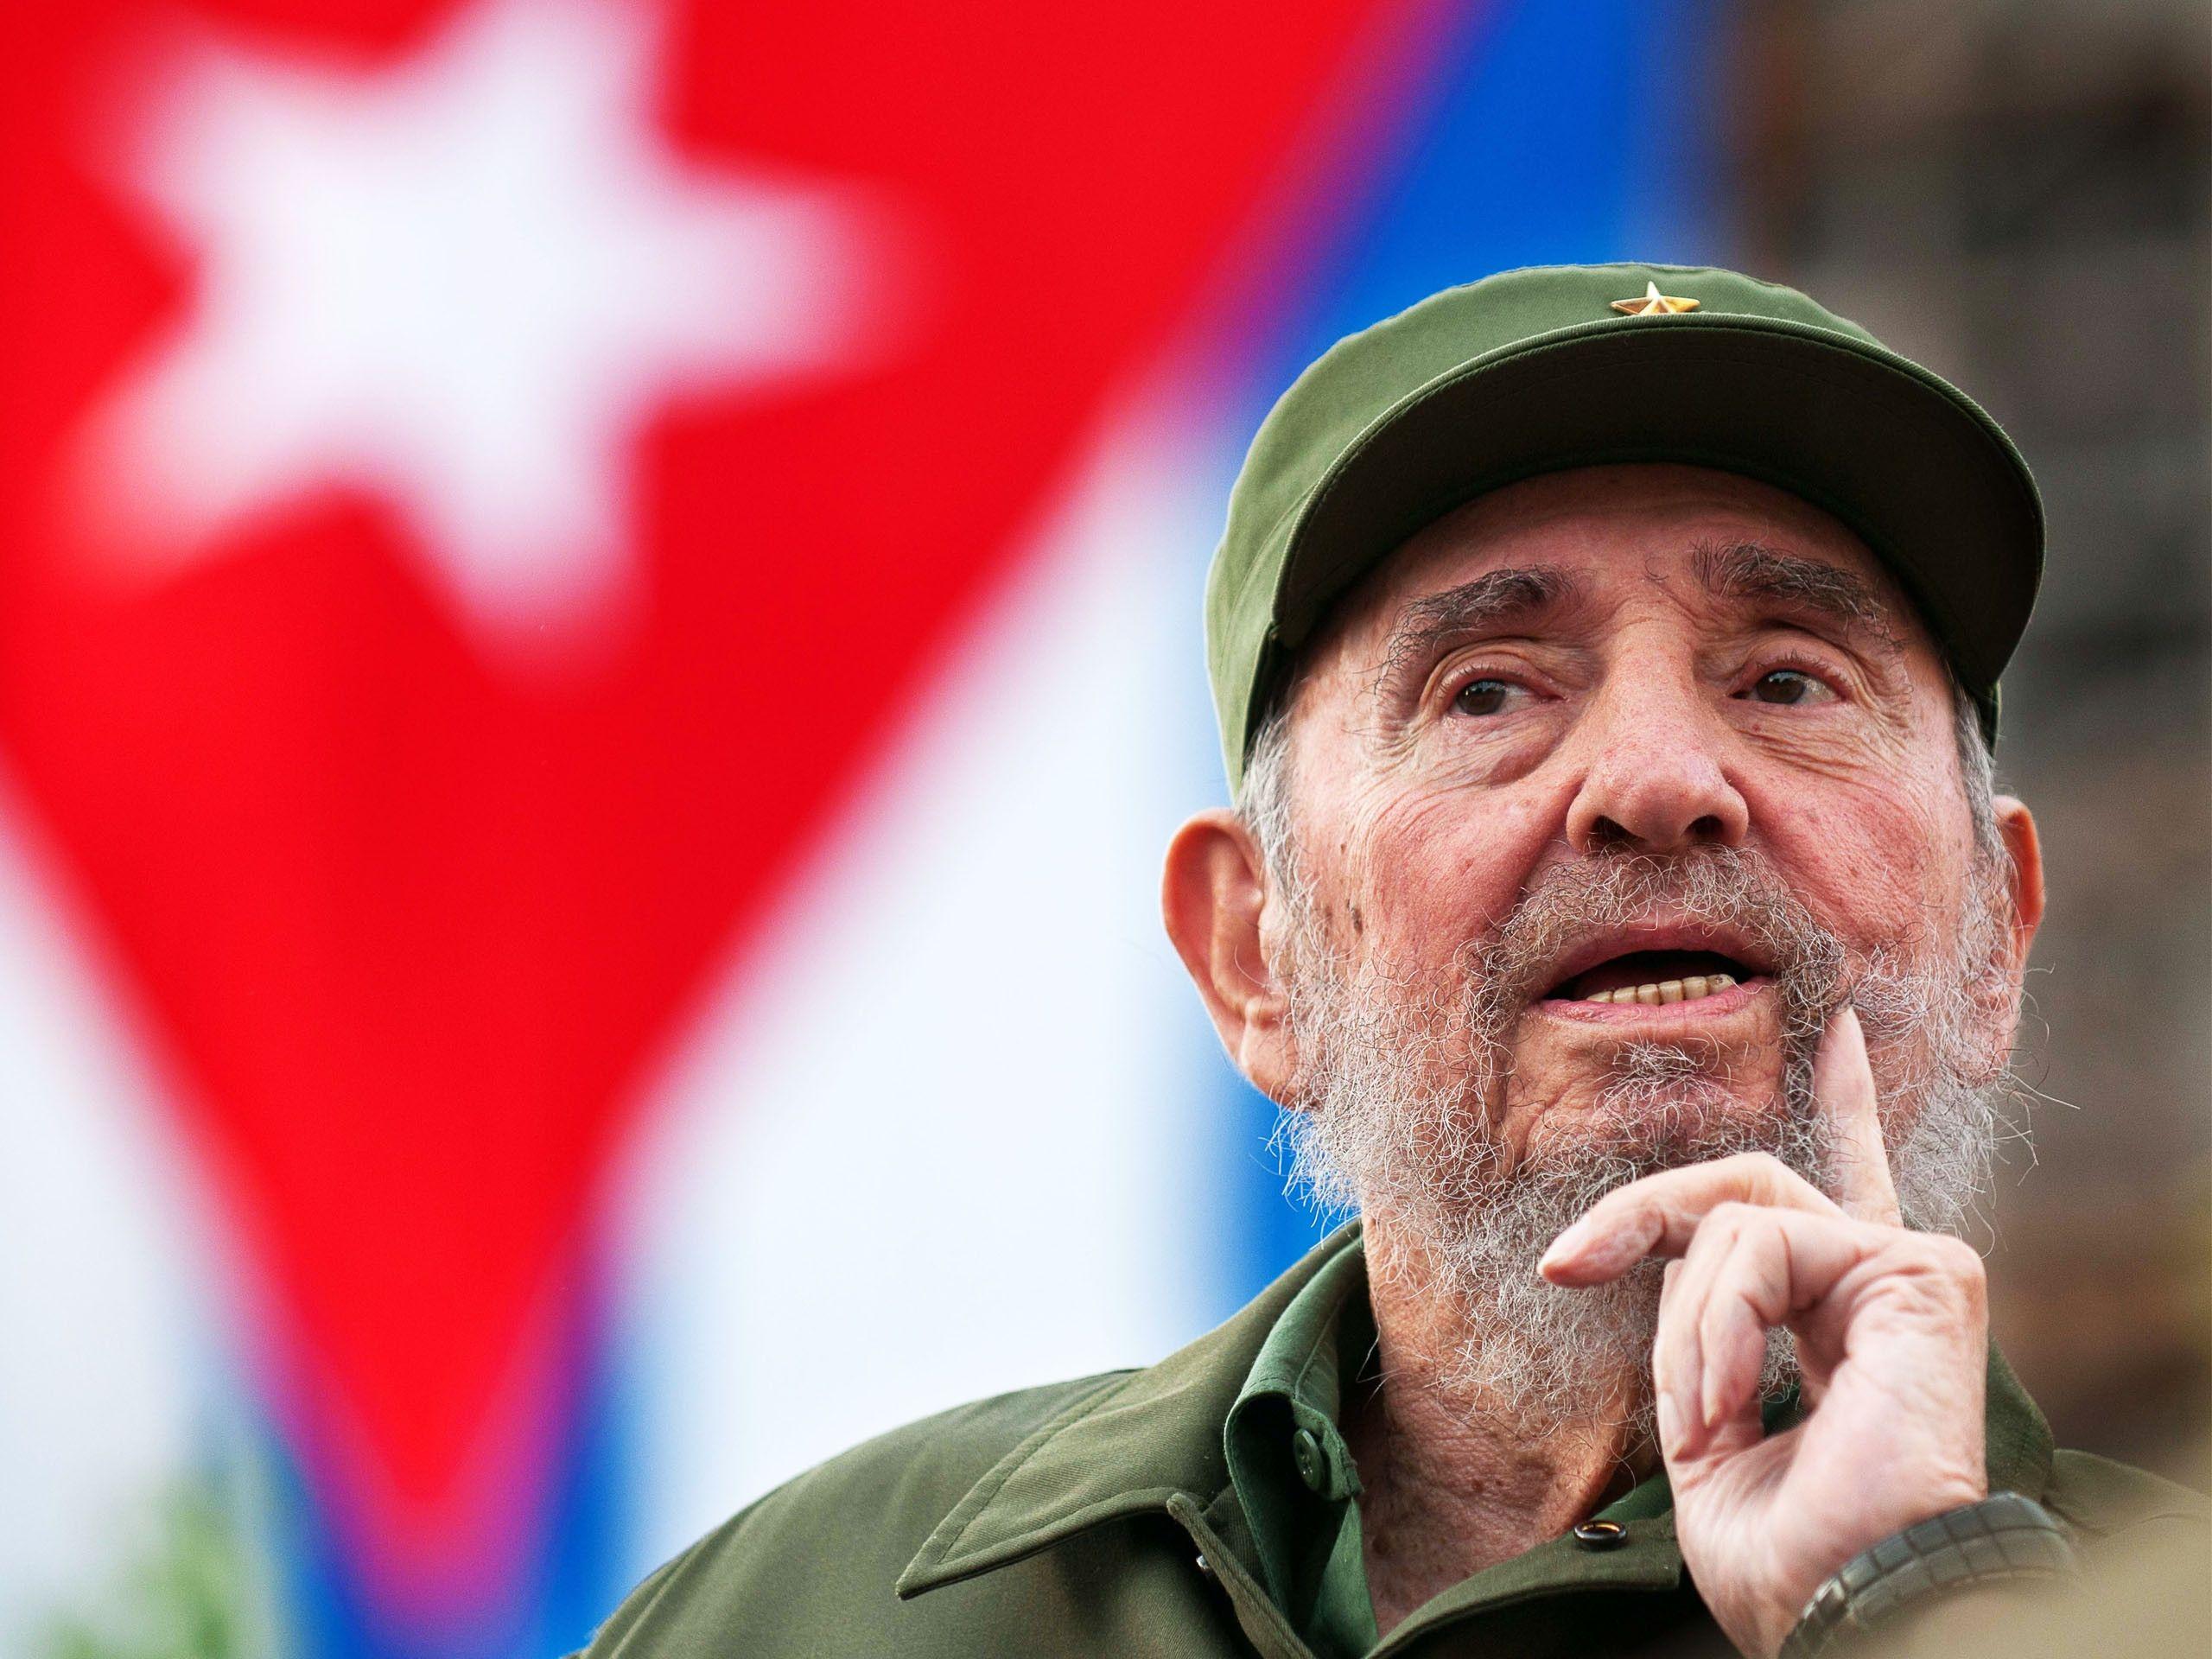 Hd Wallpaper Fidel Castro And Che Guevara 800 X 544 71 Kb Jpeg